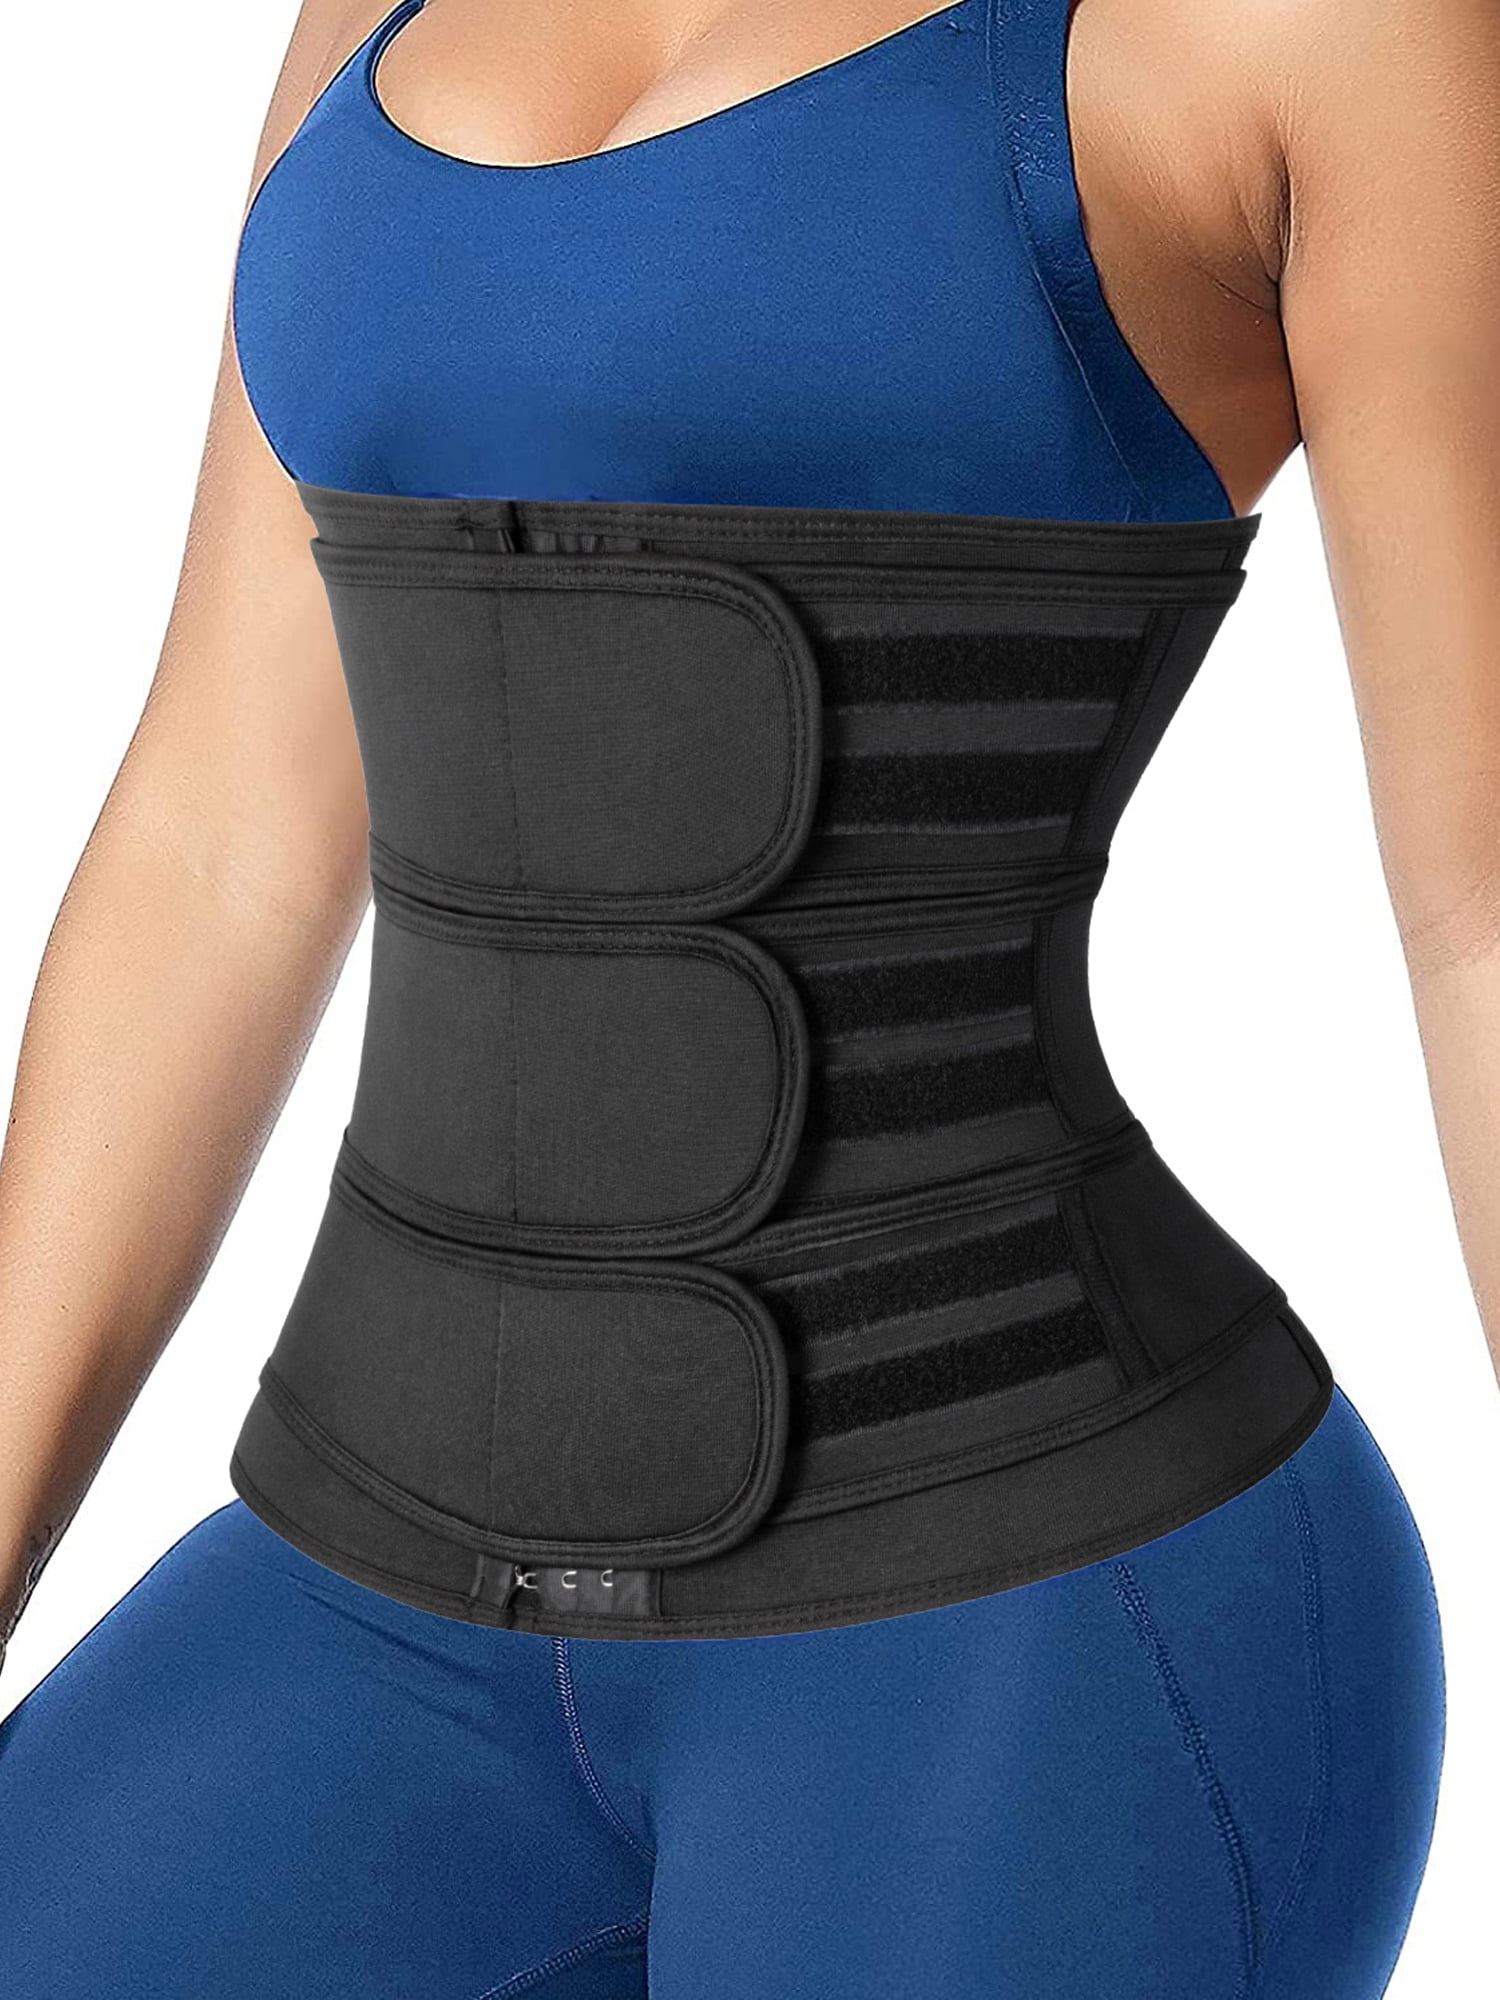 Details about   USA Fajas Colombianas Women Body Shaper Slimming Sweat Girdle Belt Waist Trainer 